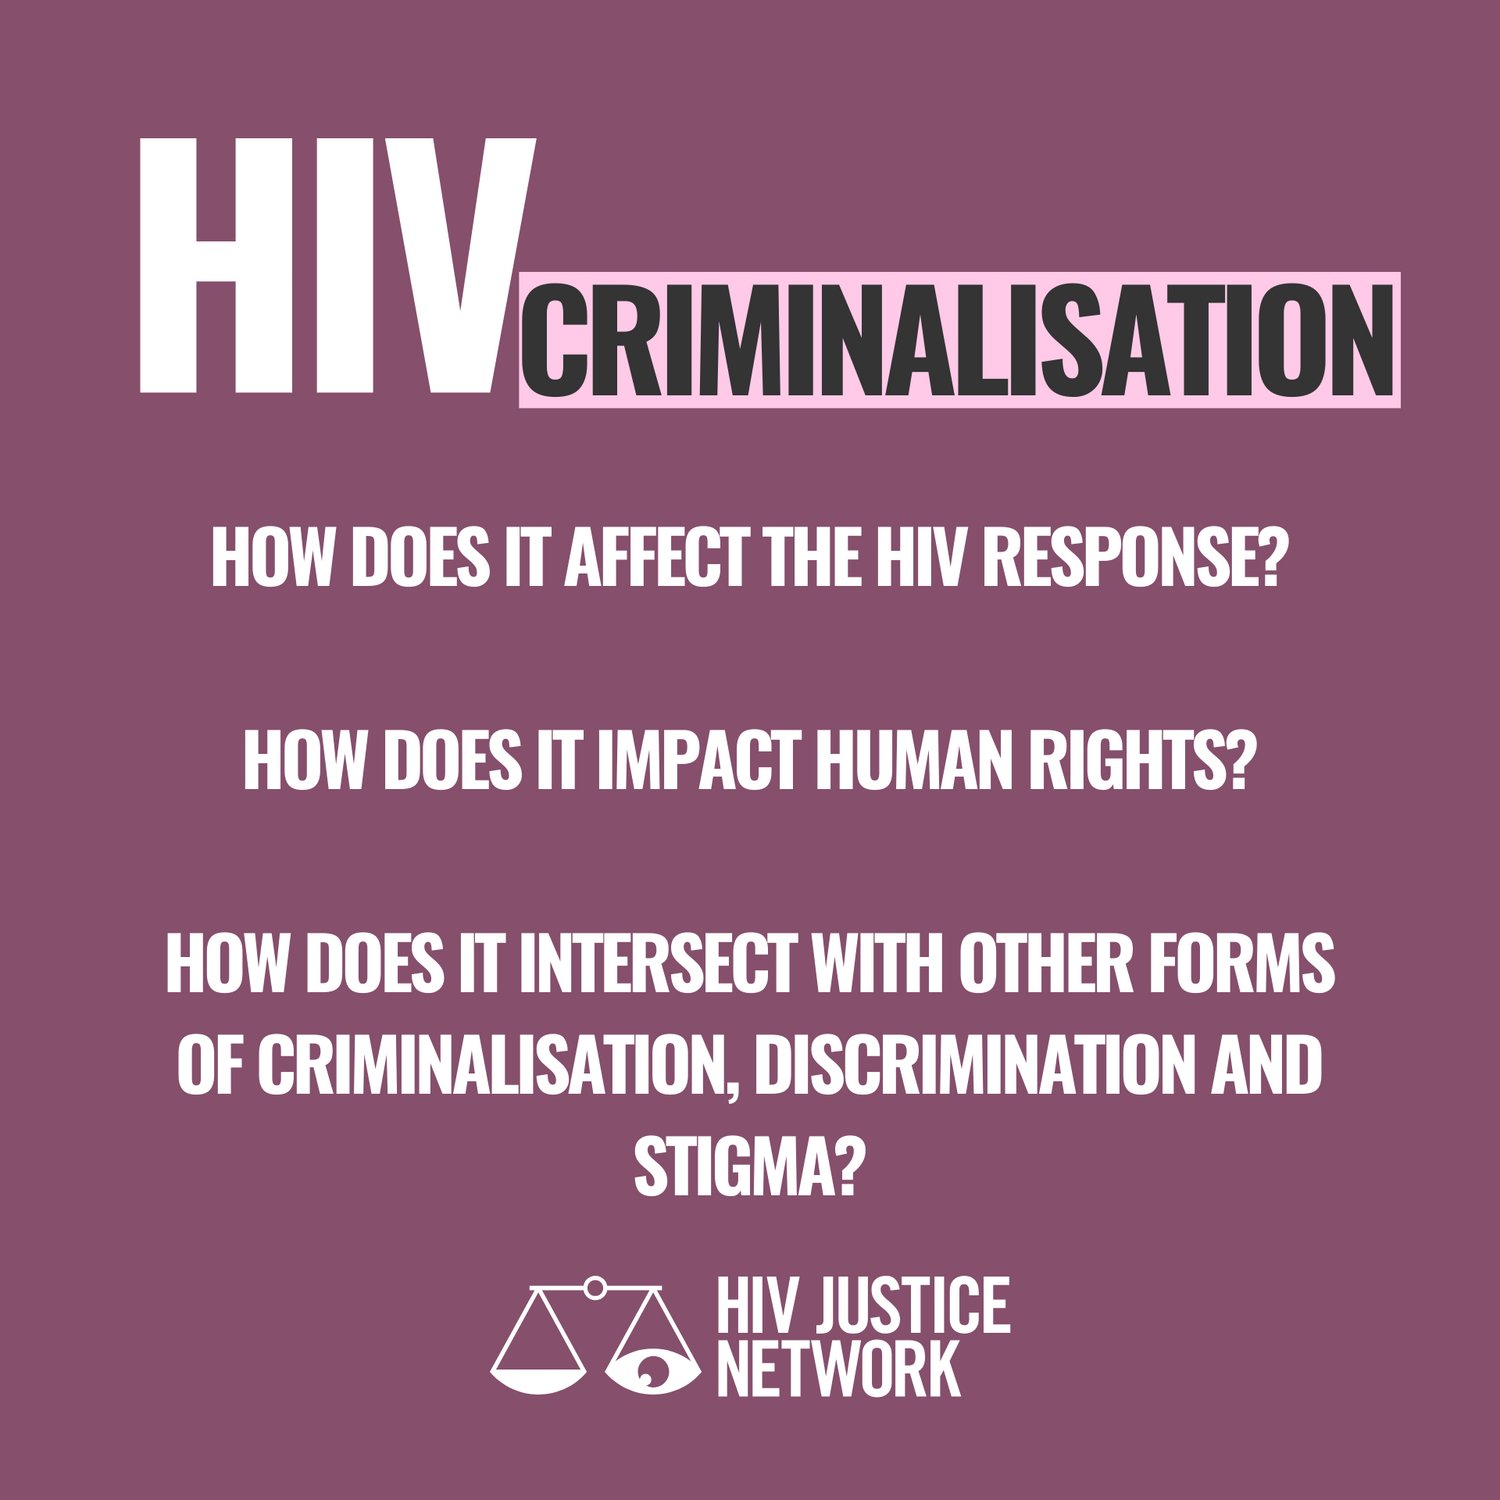 HIV criminalisation